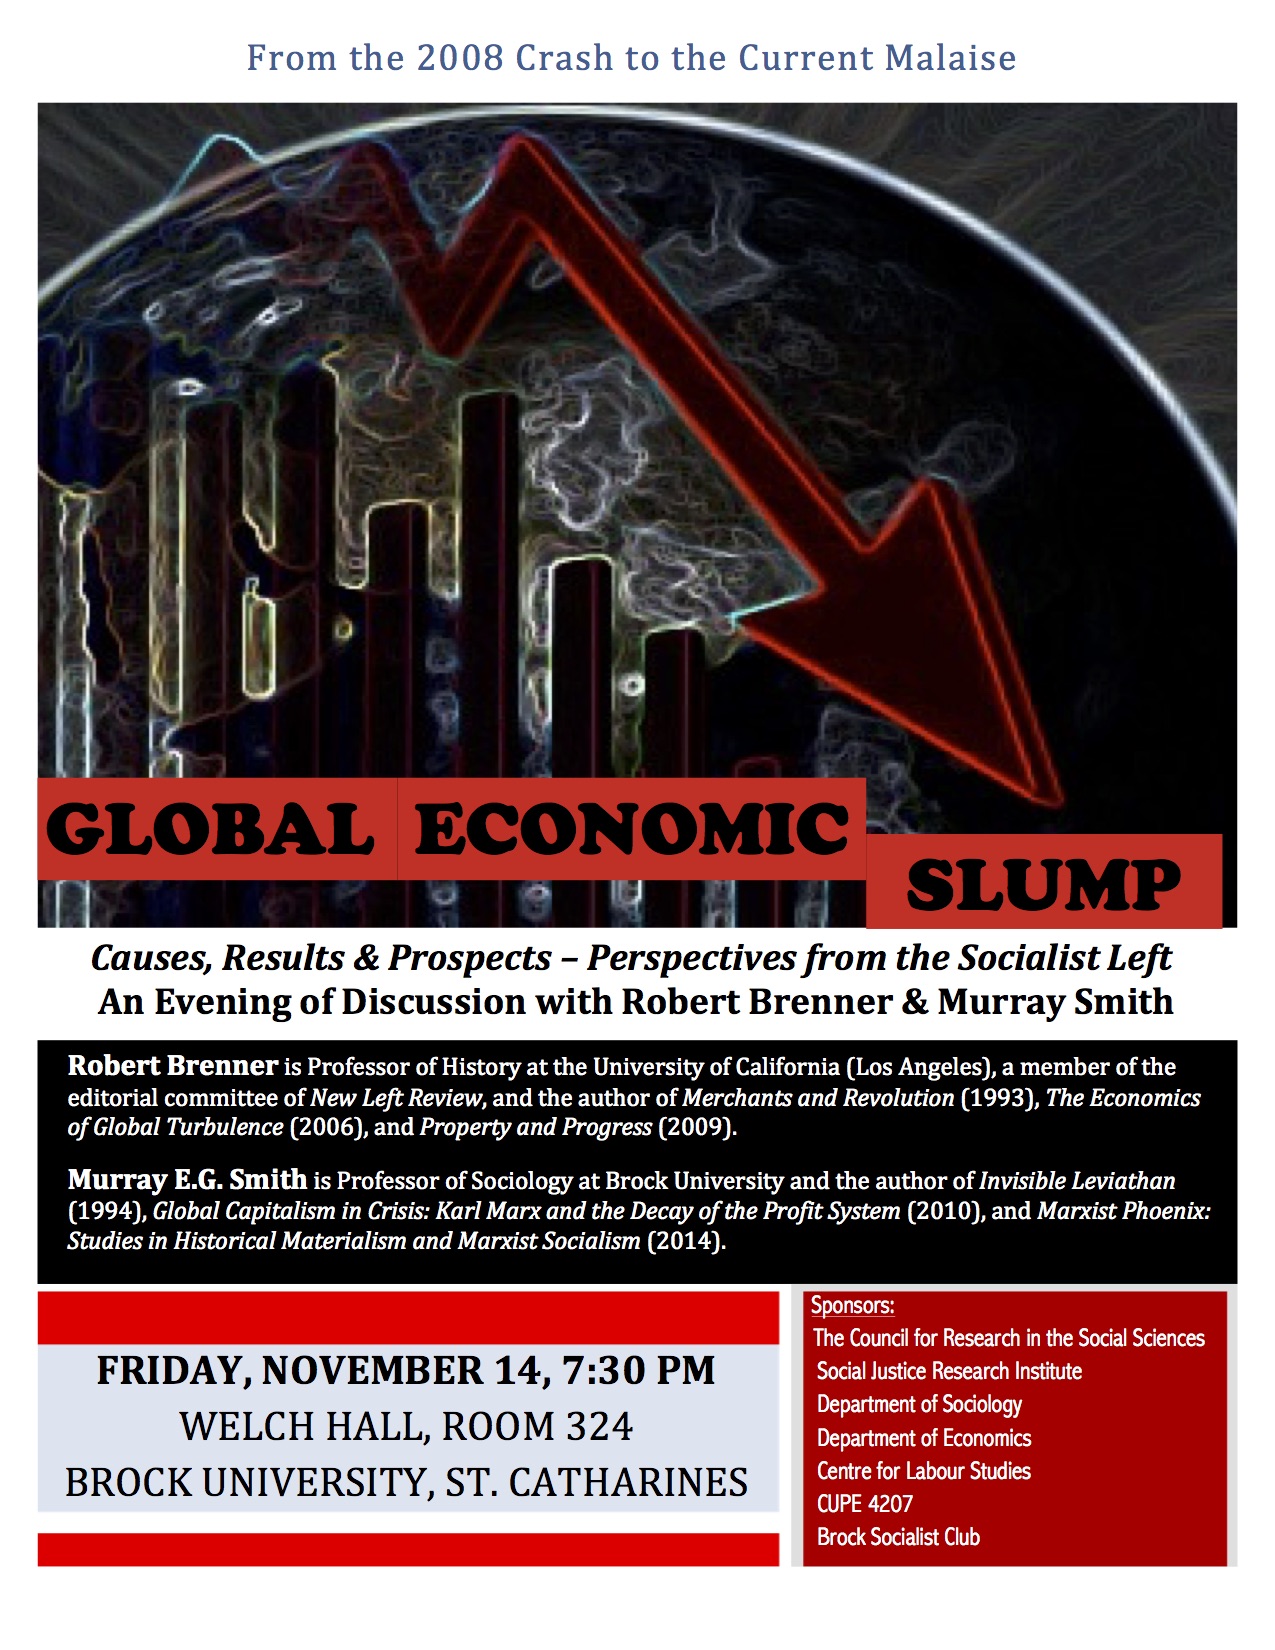 Global Economic Slump Poster copy 2